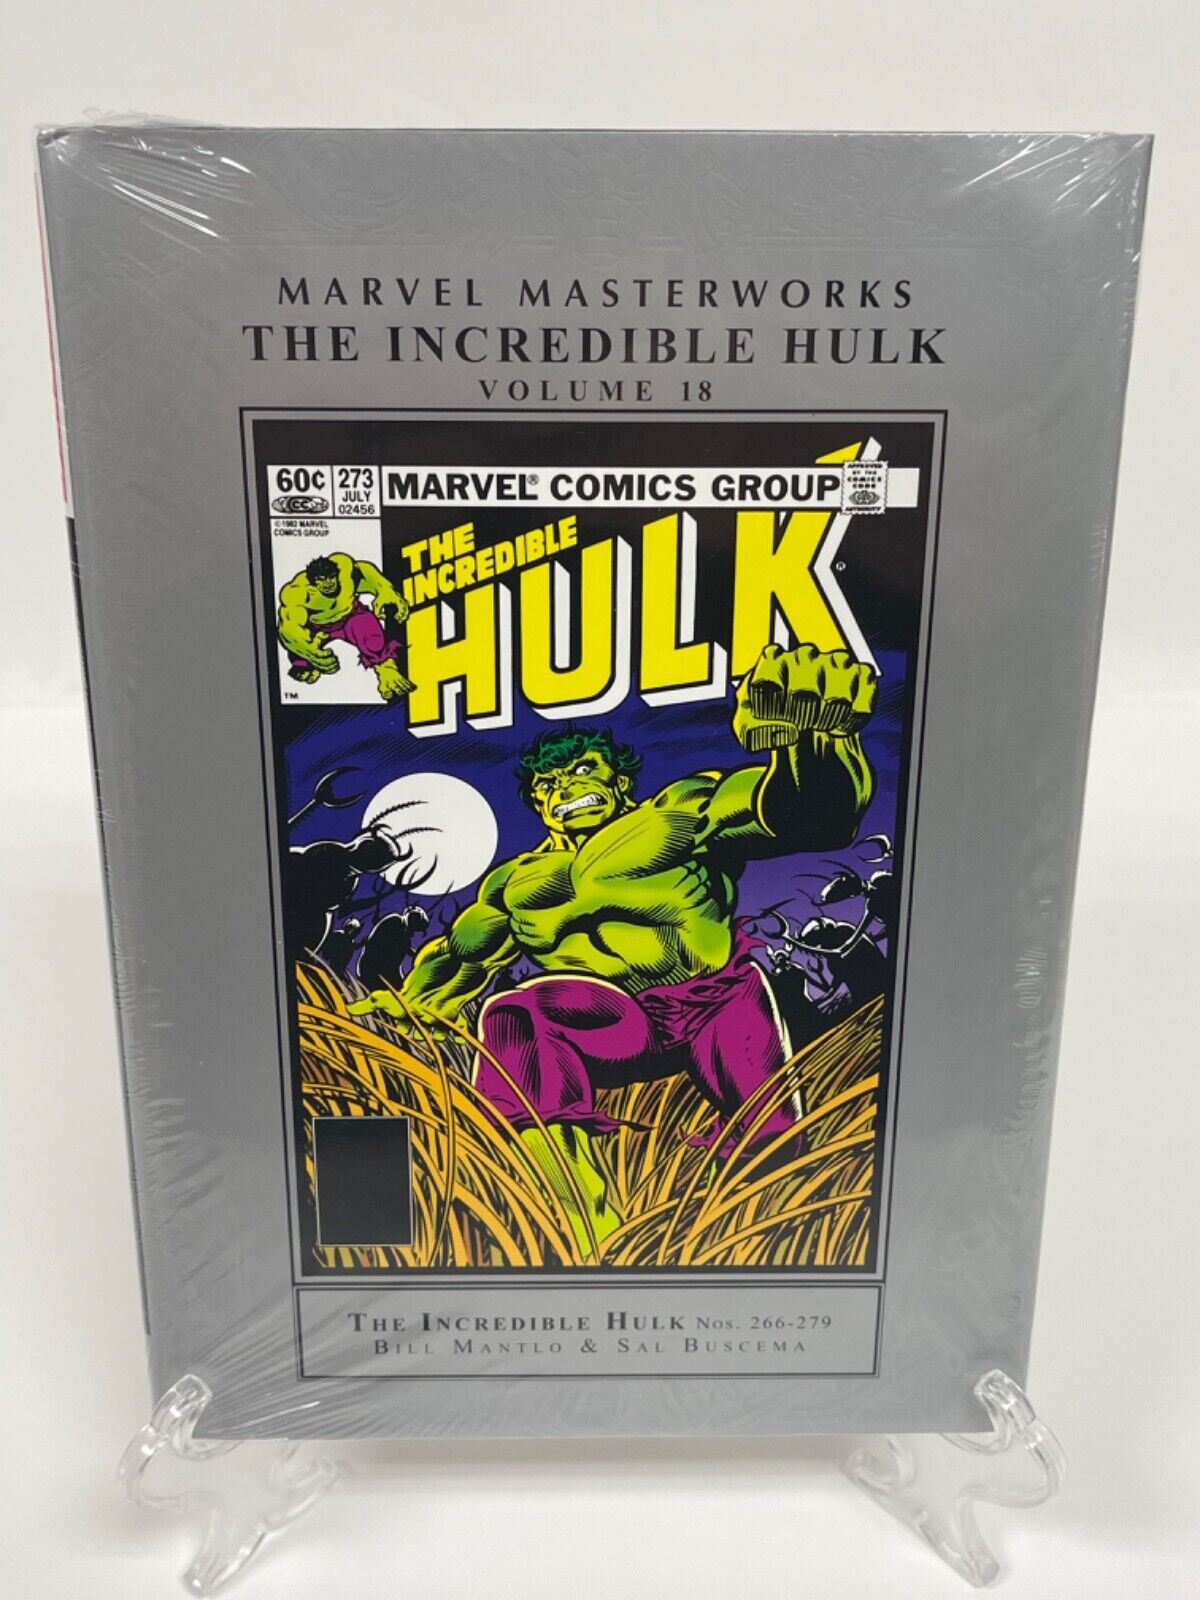 Incredible Hulk Marvel Masterworks Vol 18 New Sealed HC Hardcover Comics